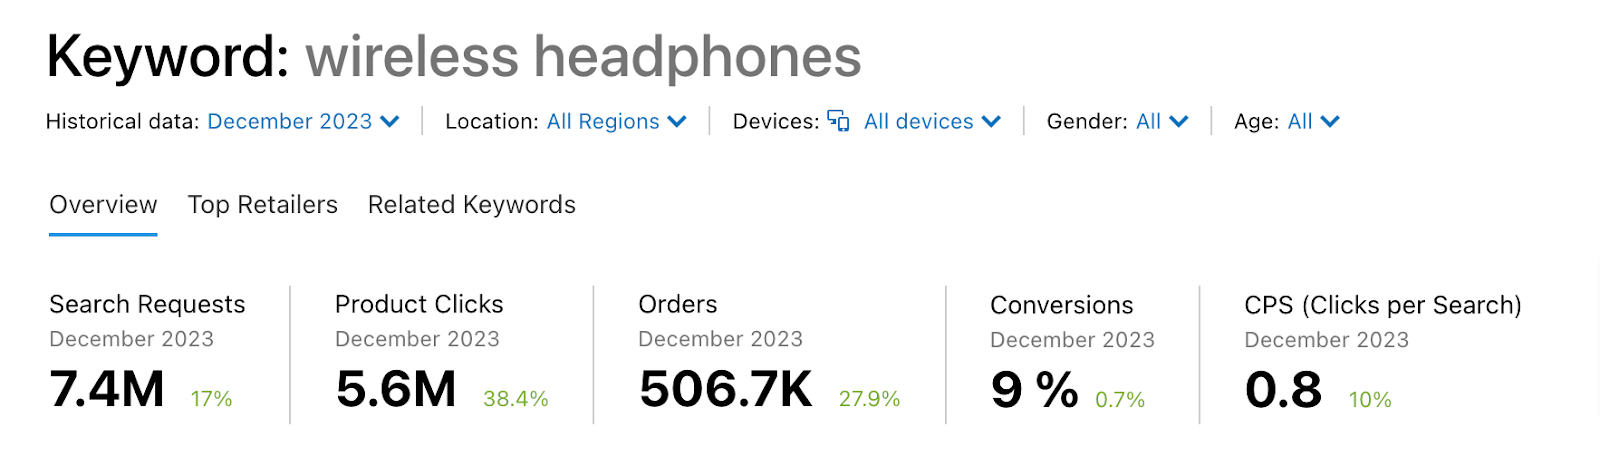 Online Retail Keyword Analytics results for "wireless headphones"